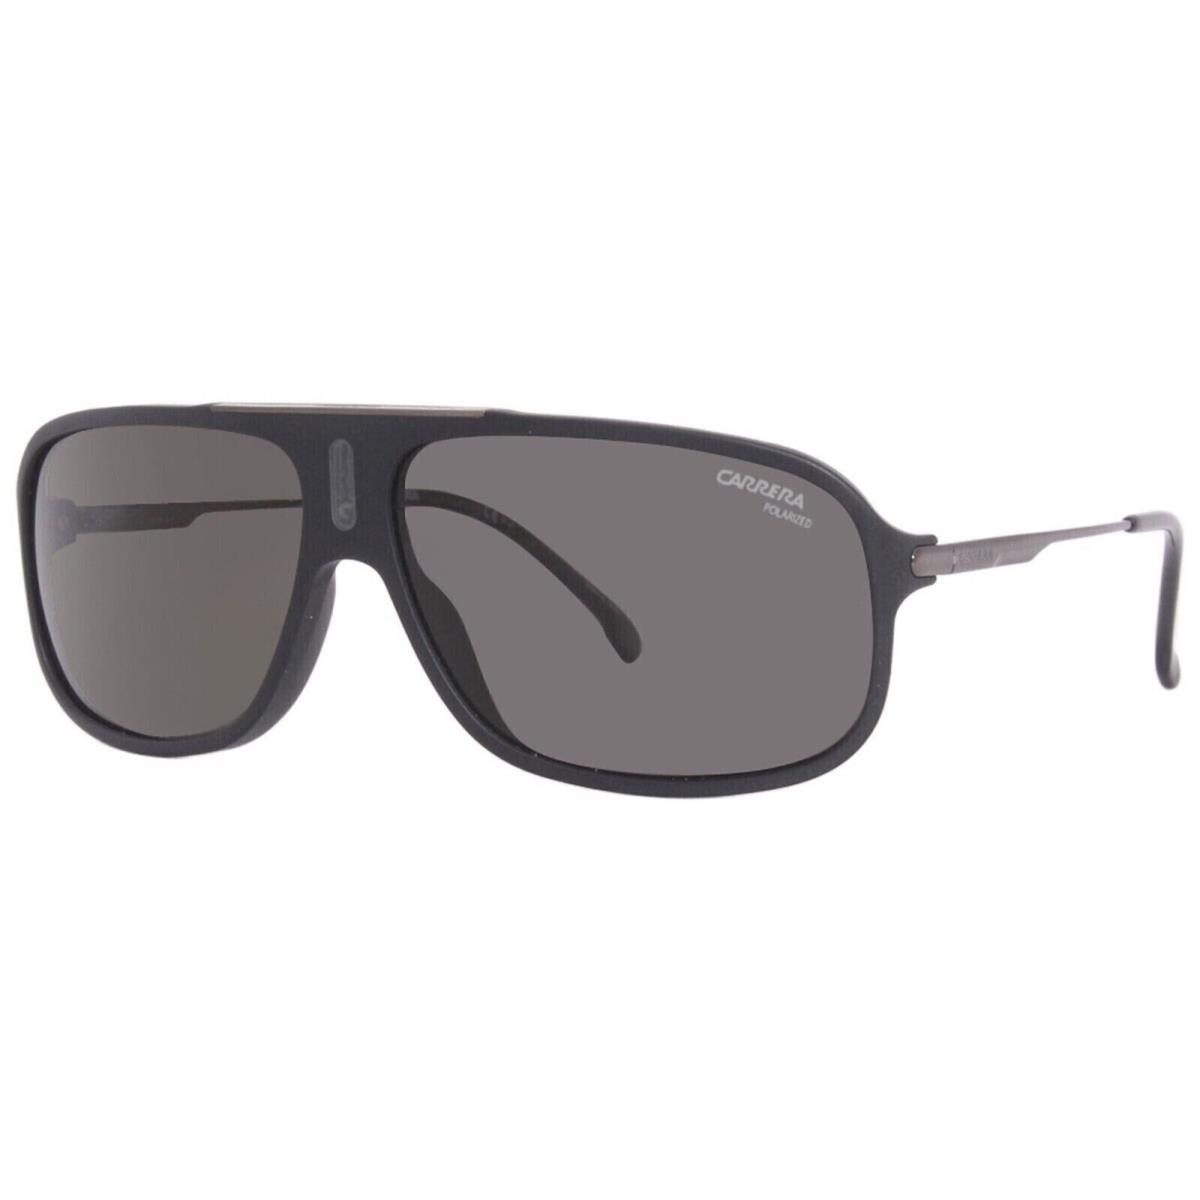 Carrera Polarized Sunglasses Cool65 003M9 Matte Black Frame W/ Grey Lens 64MM